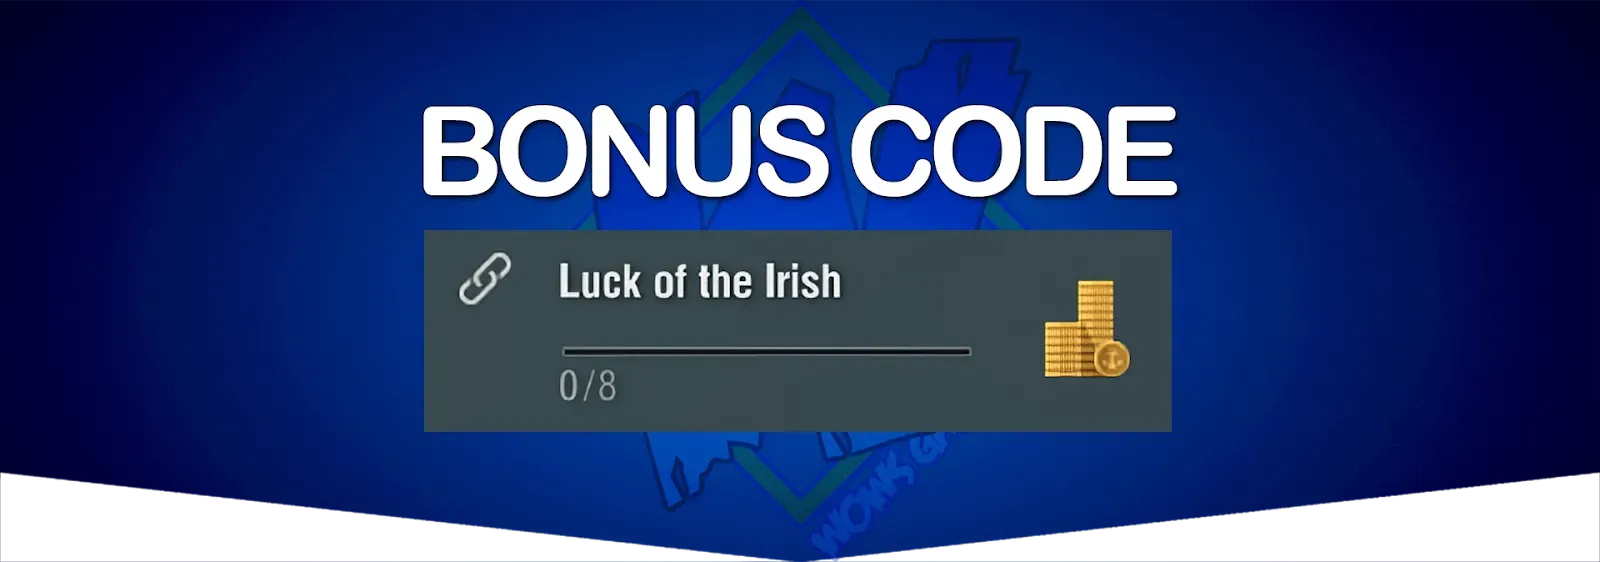 image of bonus code header